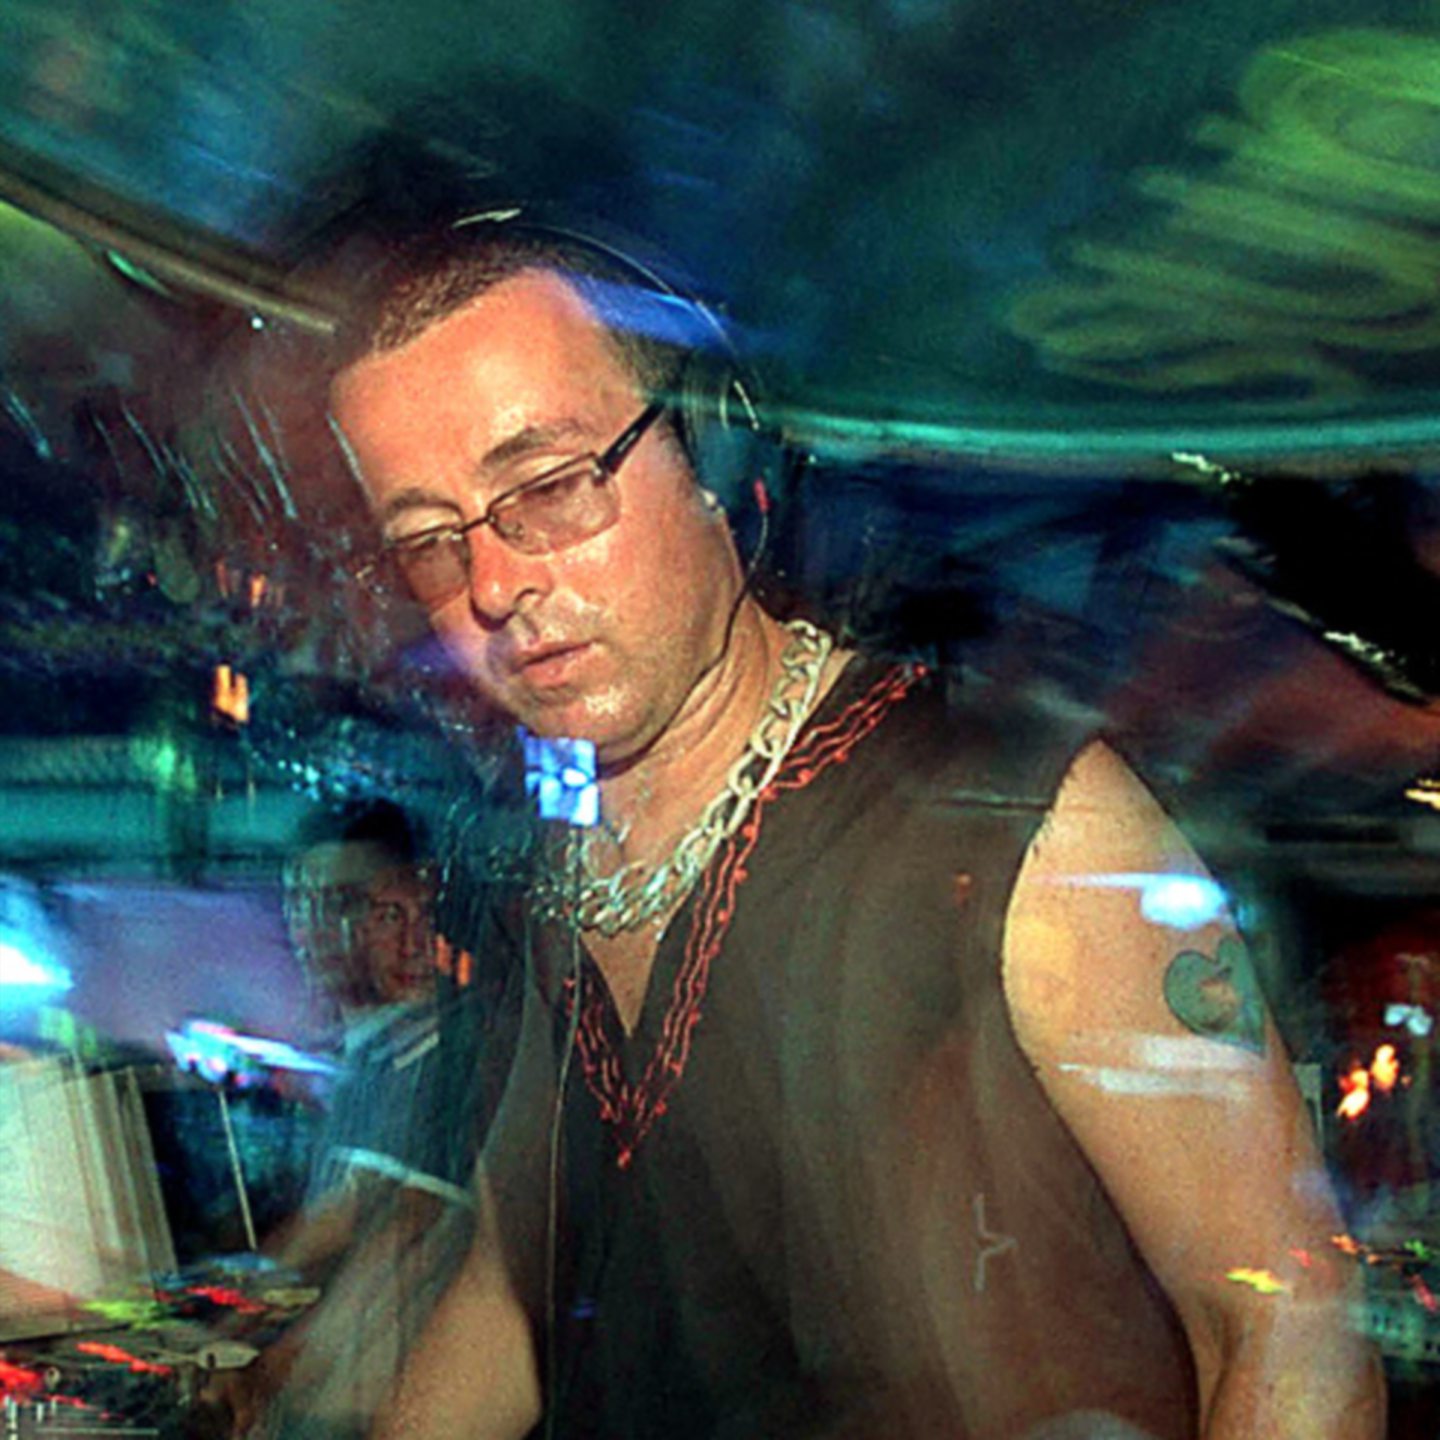 DJ Judge Jules wearing glasses and headphones at his mixing desk